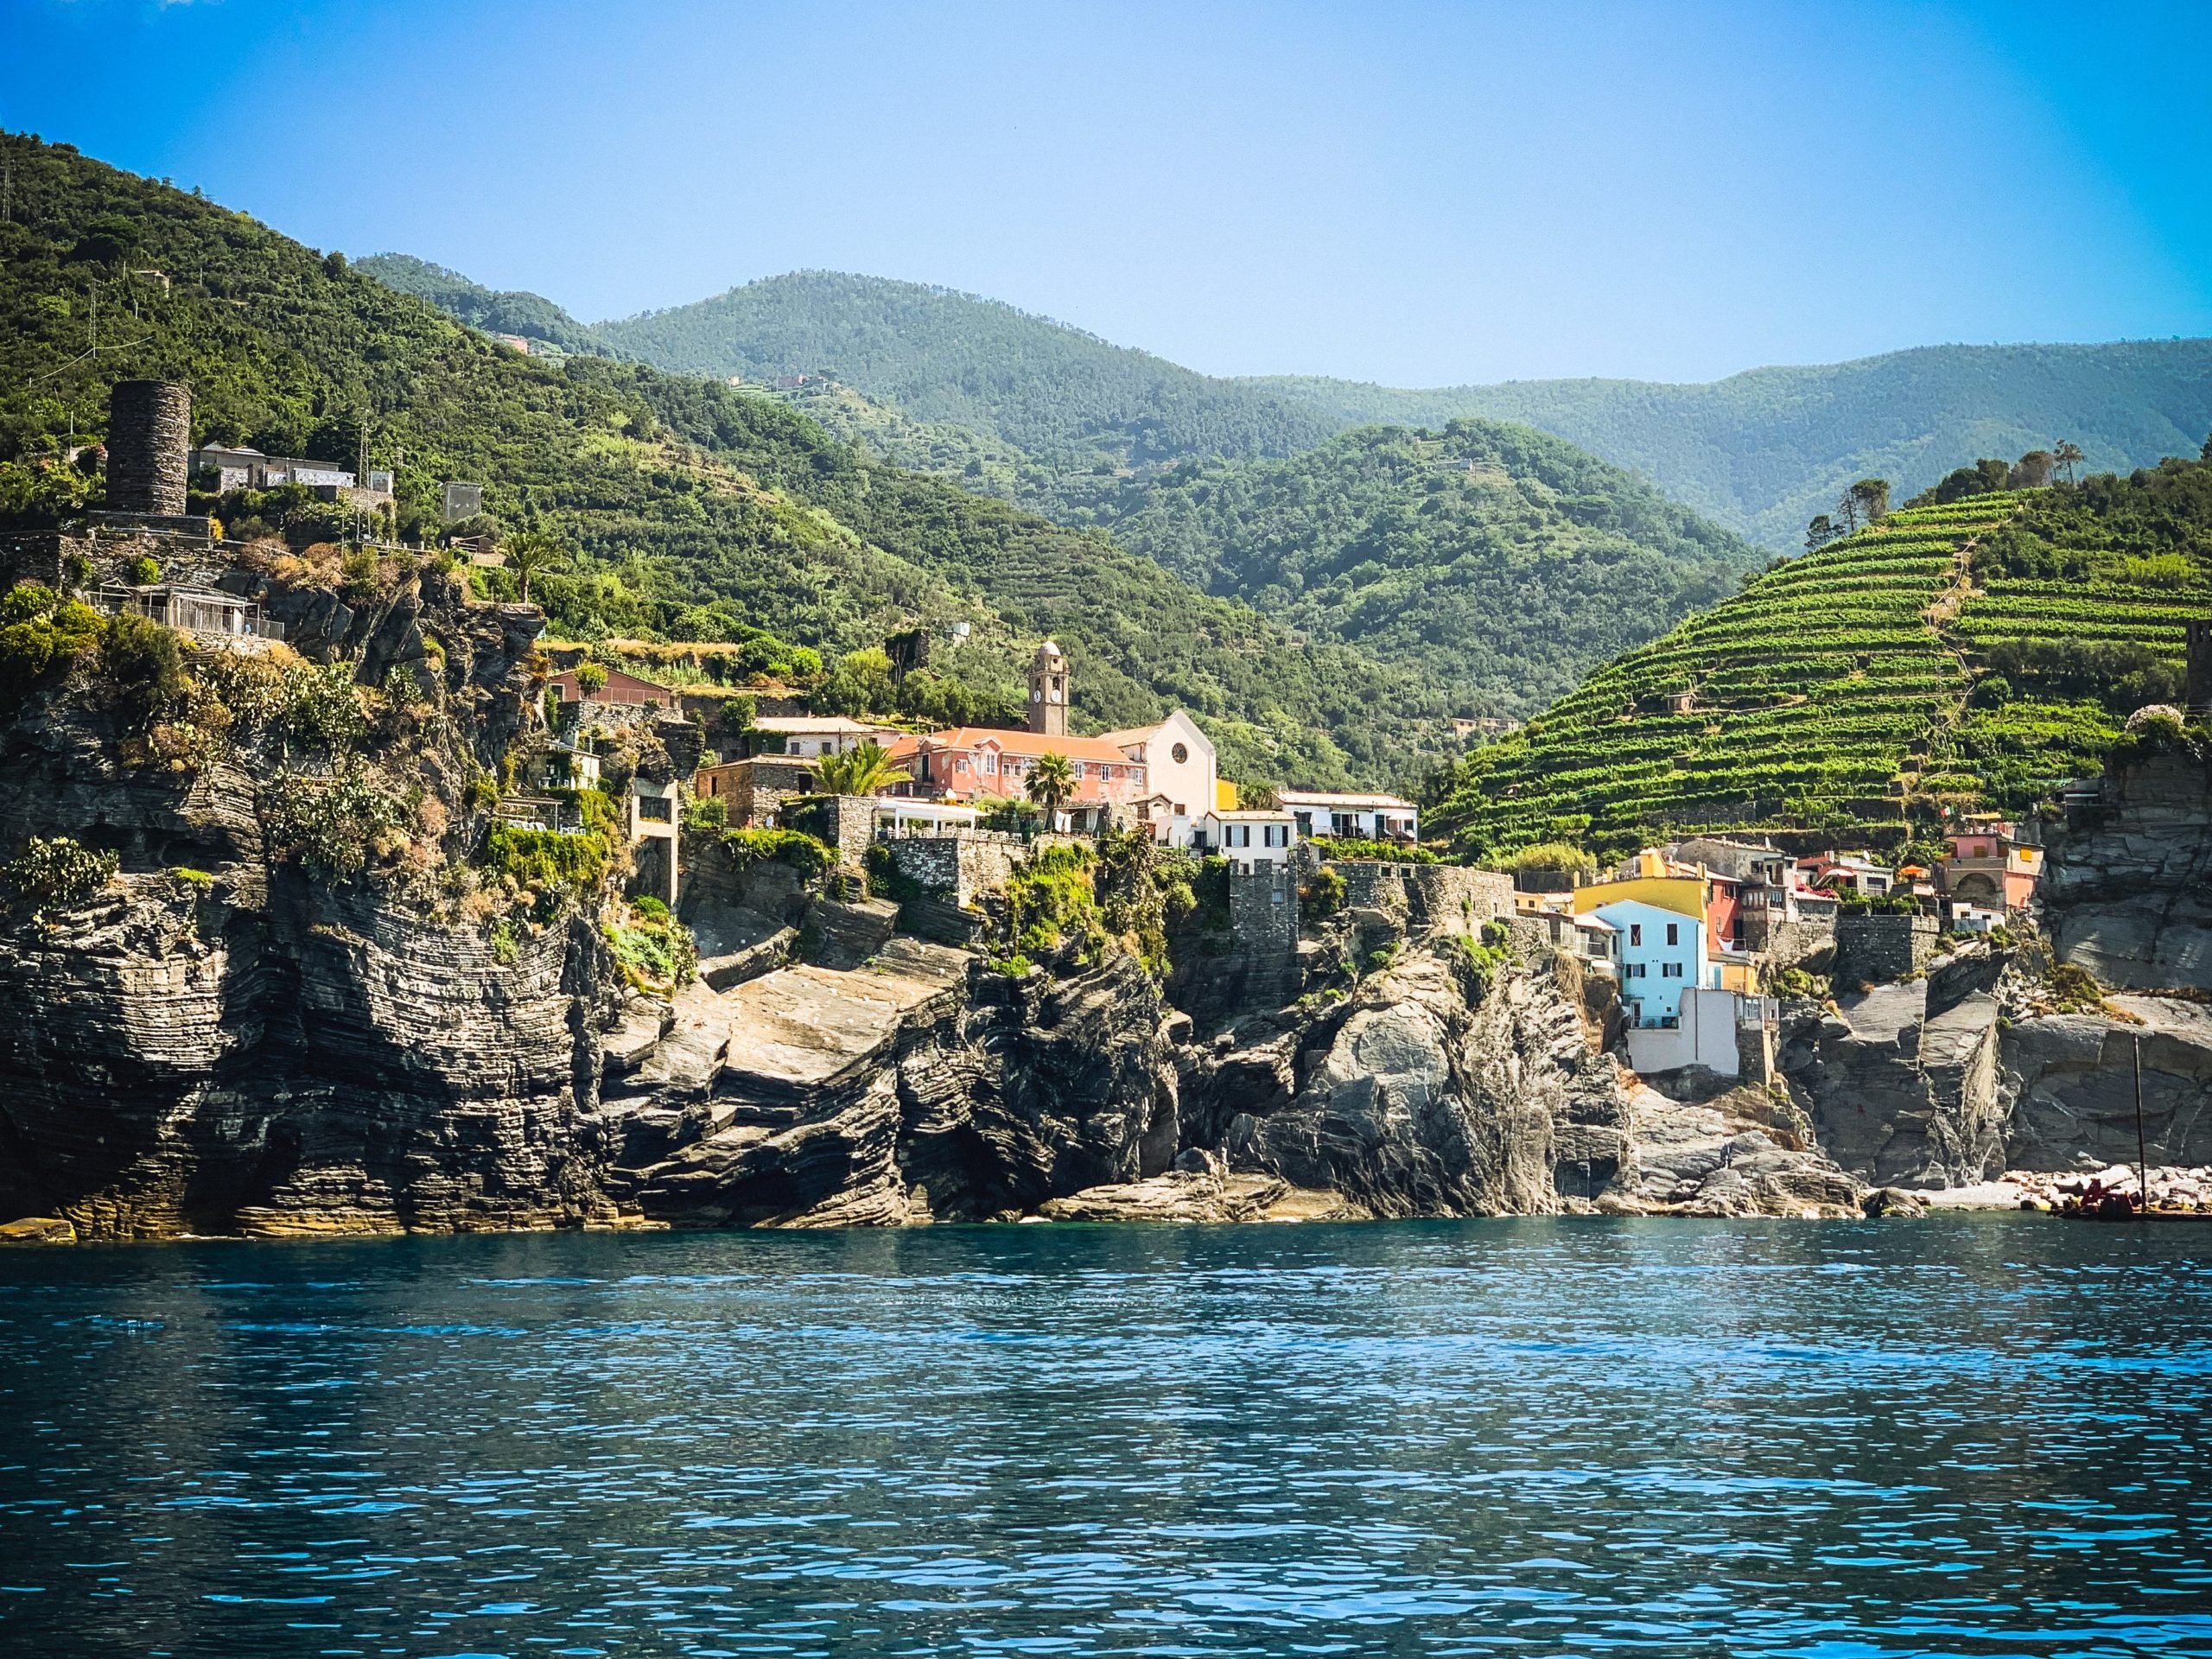 Vernazza sits on the Ligurian coastline.